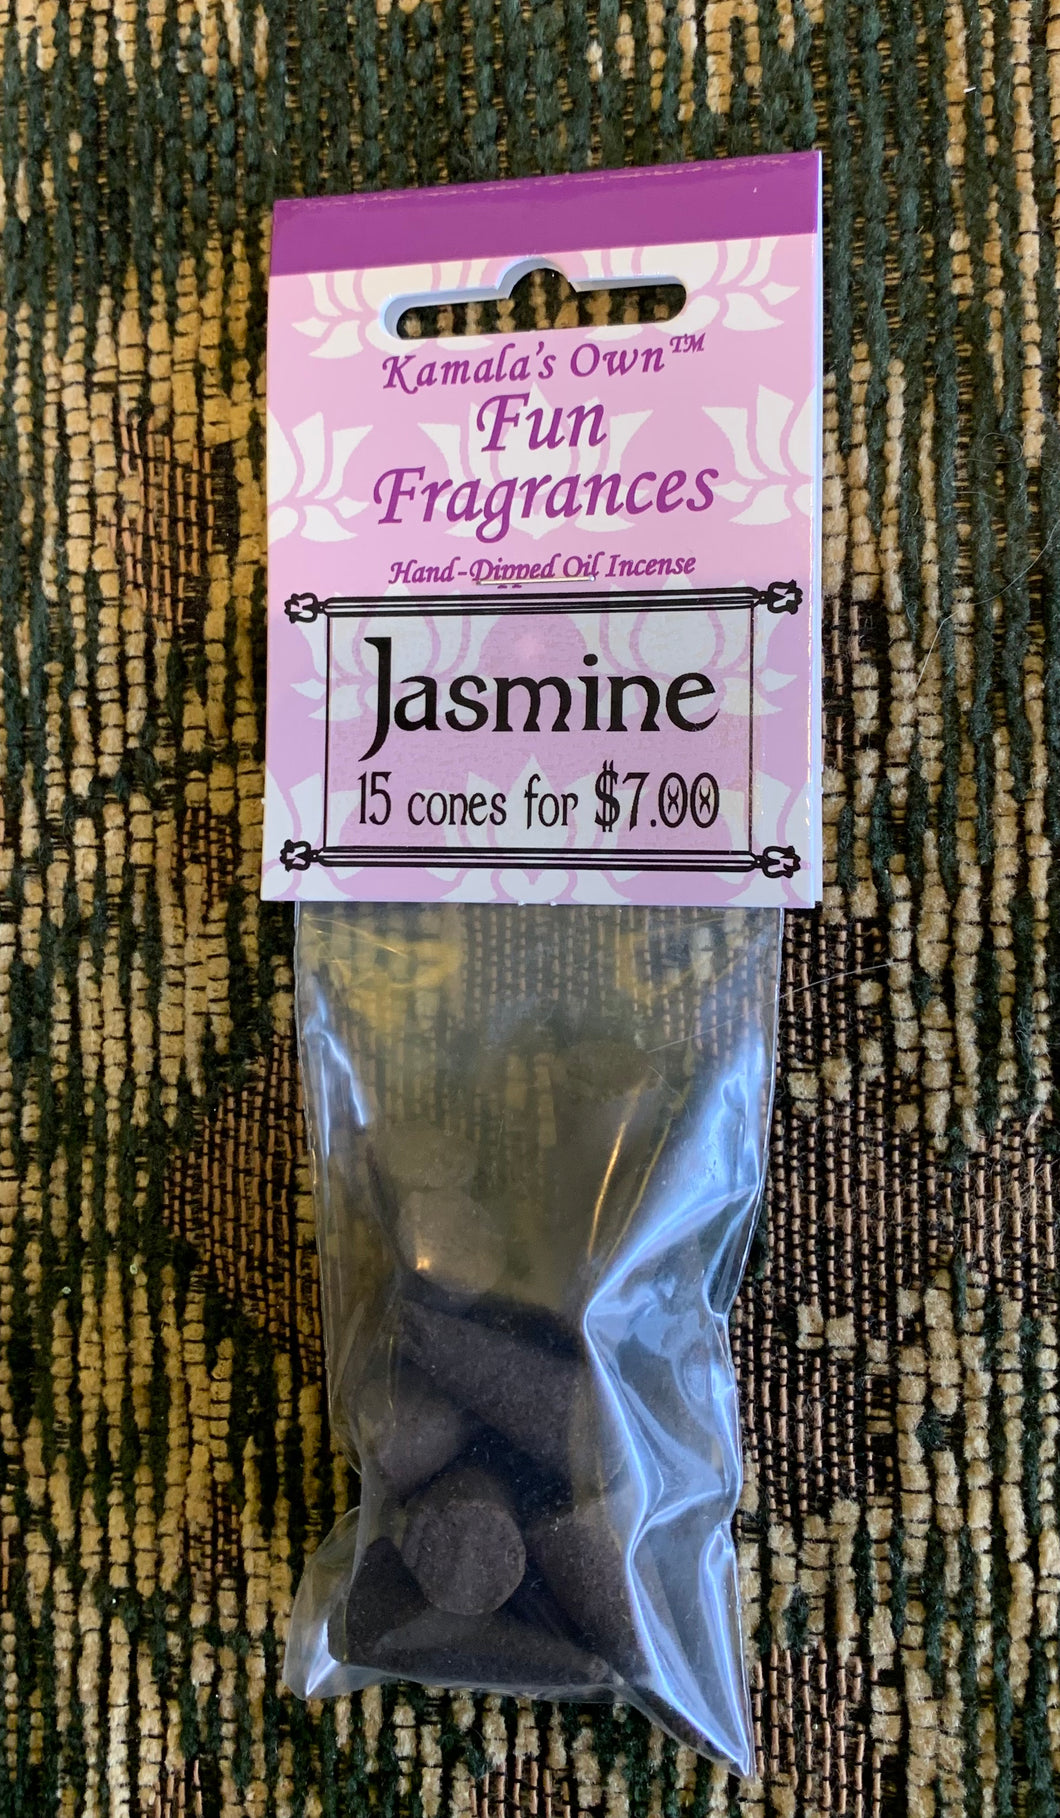 Jasmine cones